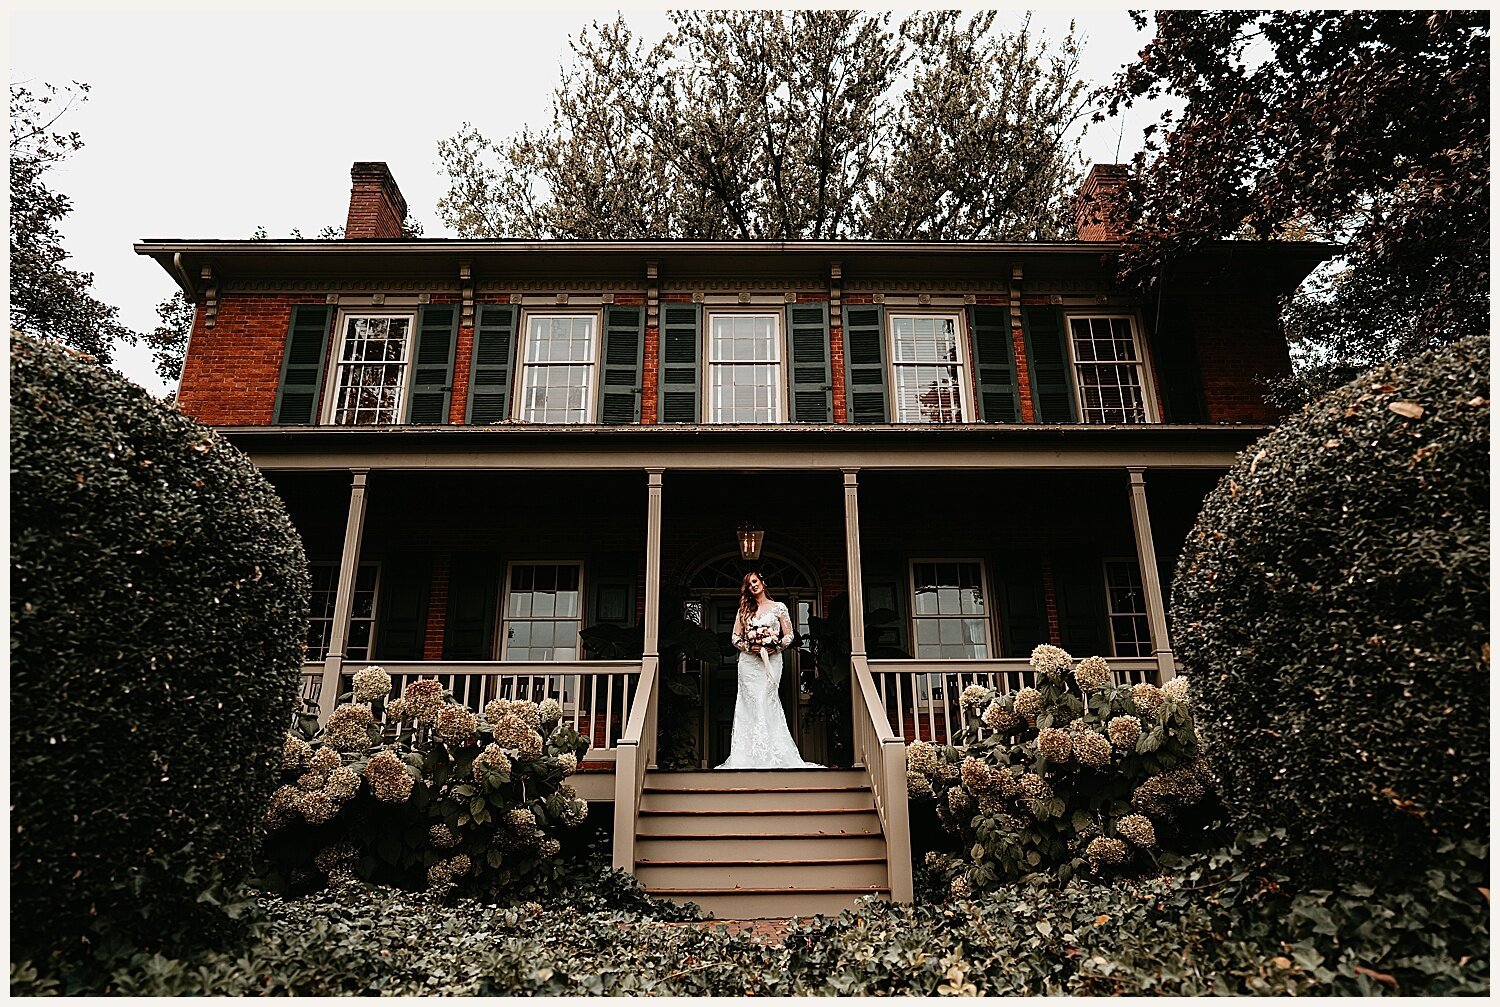 NEPA-lehigh-valley-bloomsburg-wedding-photographer-at-the-cypress-house-new-columbia-pa_0016.jpg